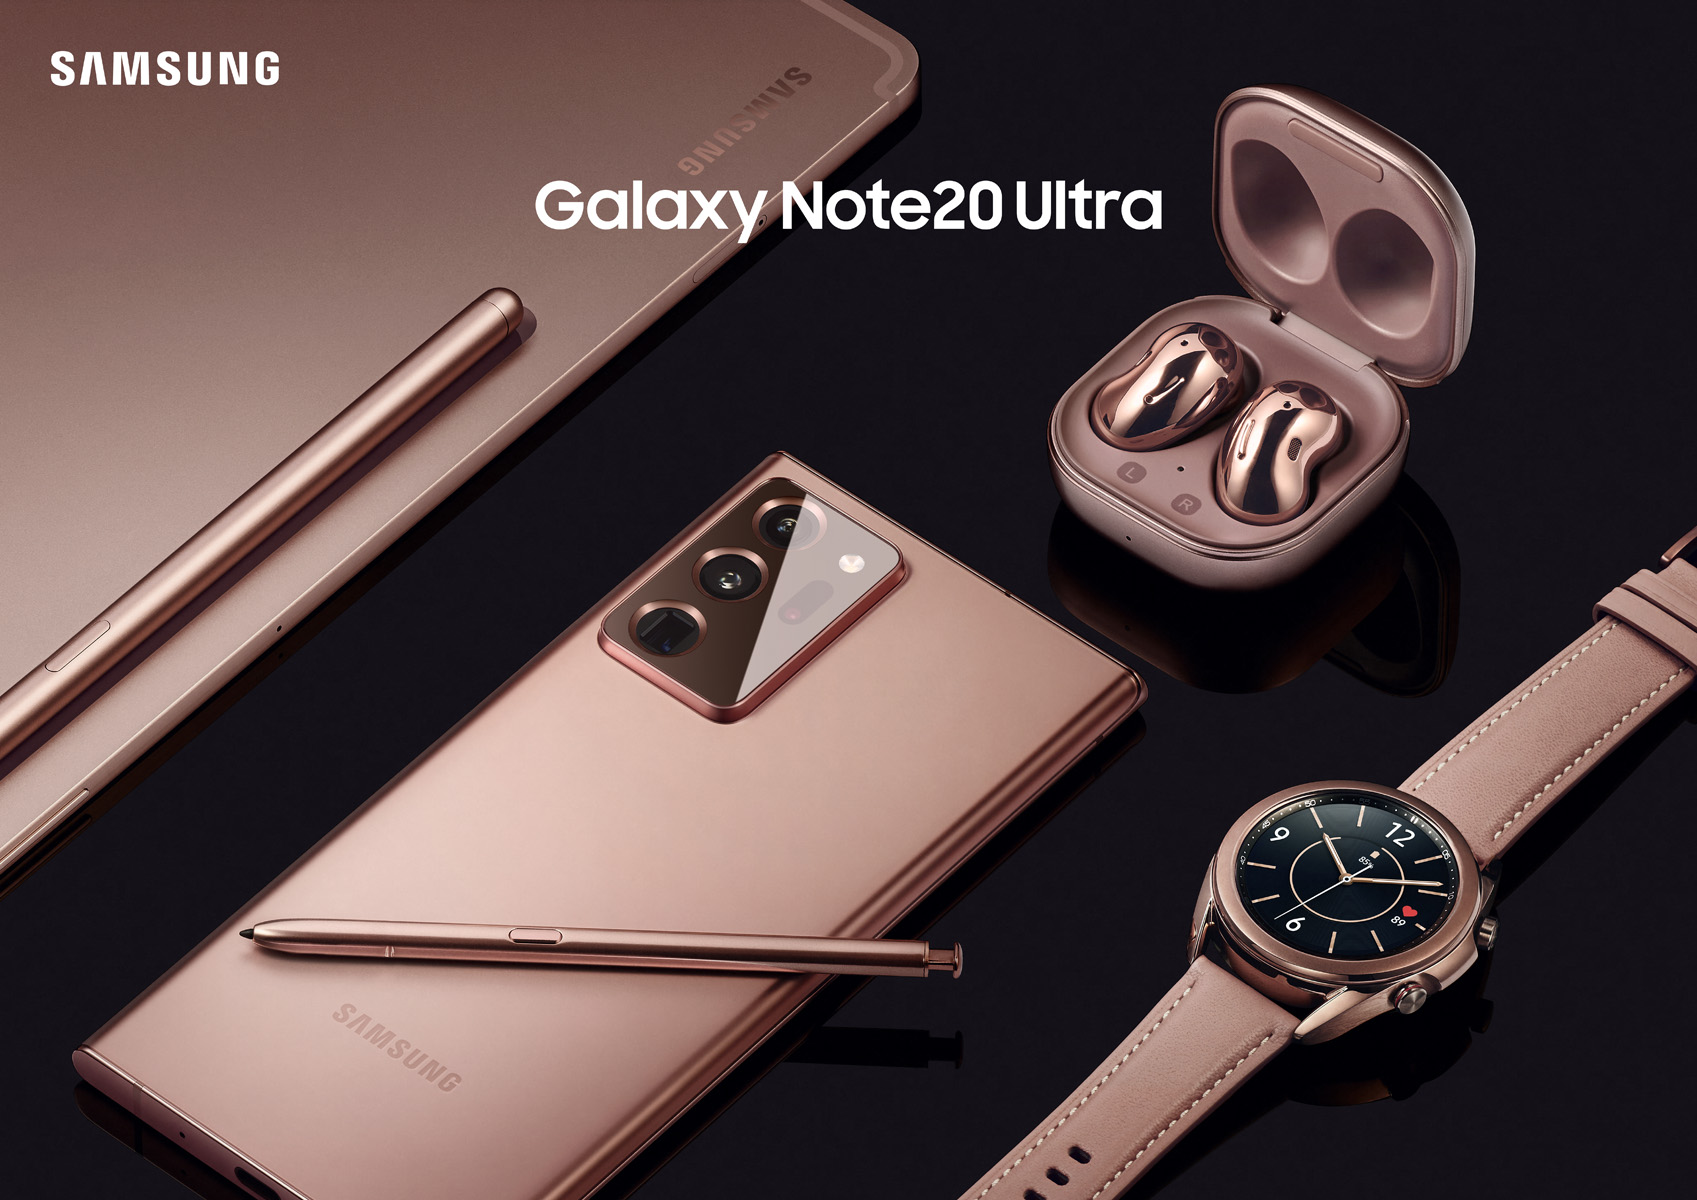 Samsung NOTE 20, Tab S7, Galaxy Watch 3, Galaxy Buds Live